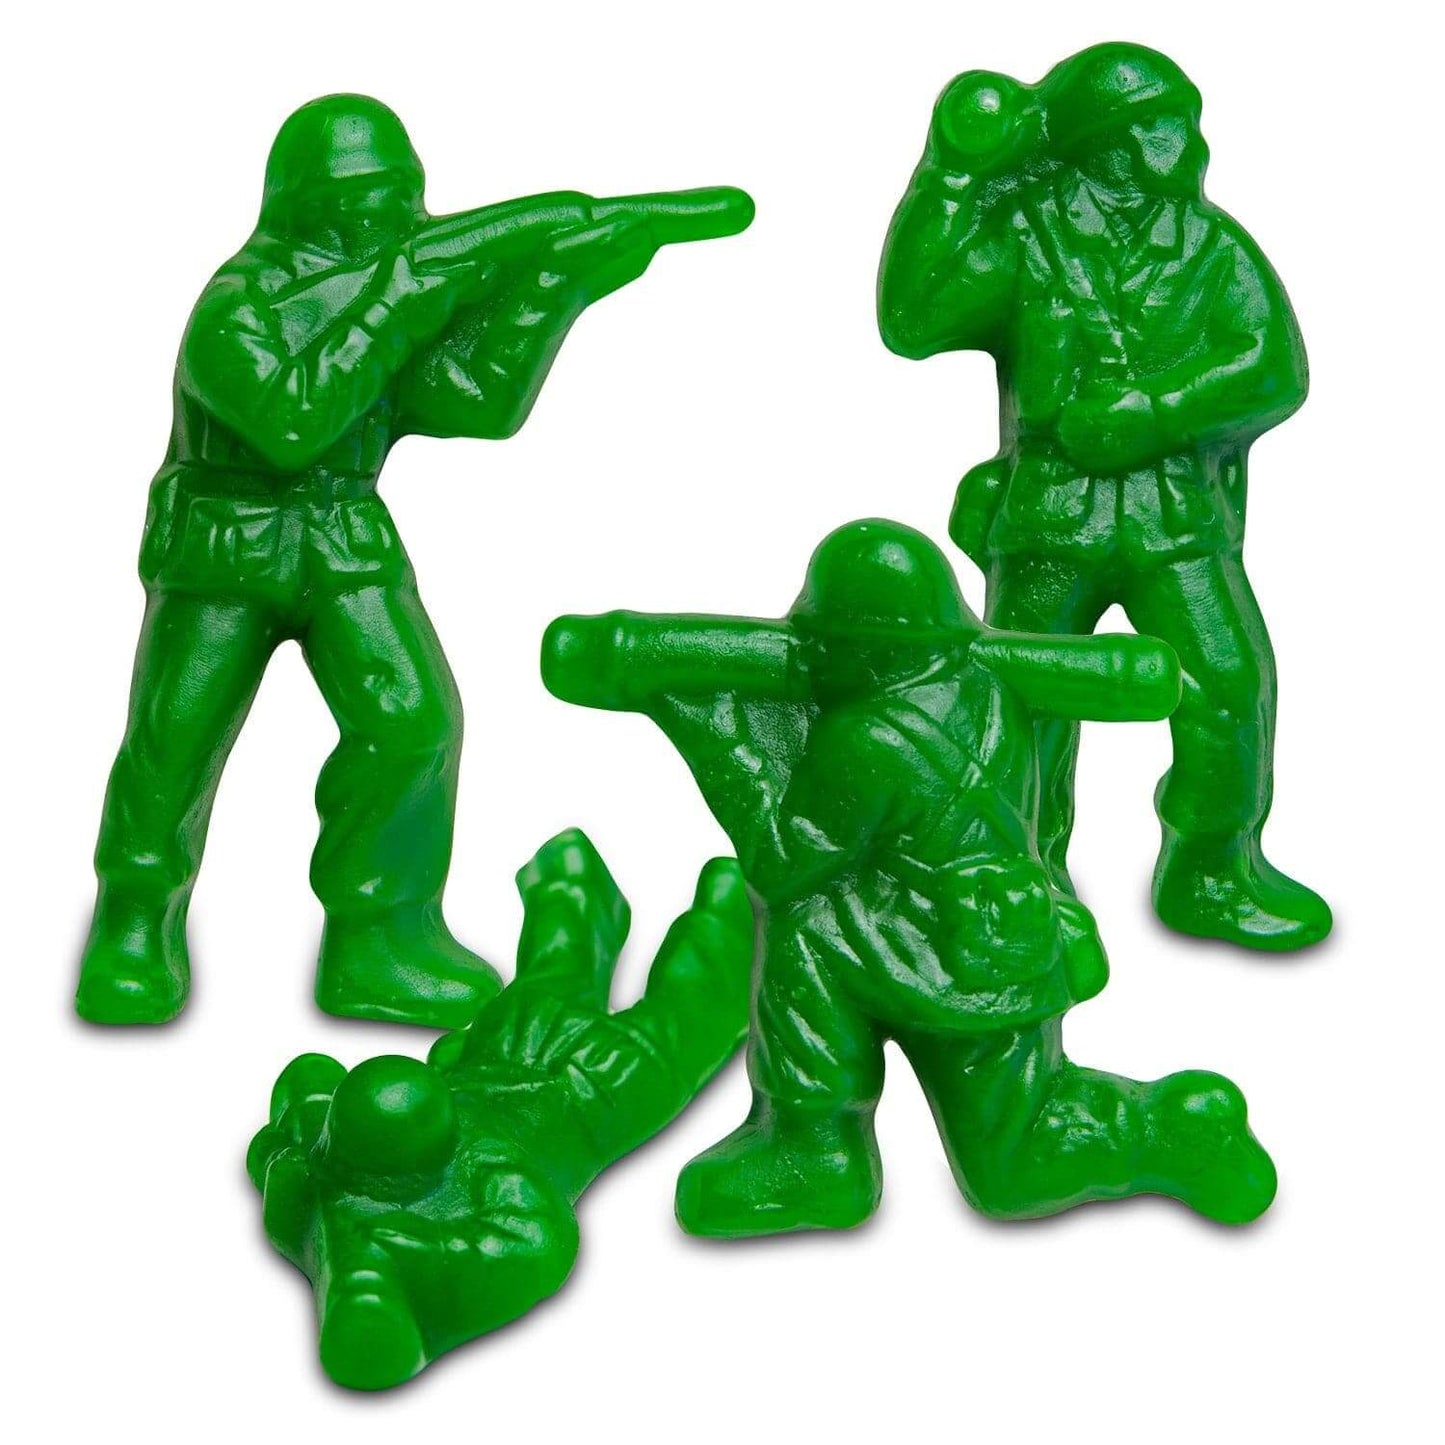 Albanese Green Gummi Army Guys Green Apple Flavor 5lbs